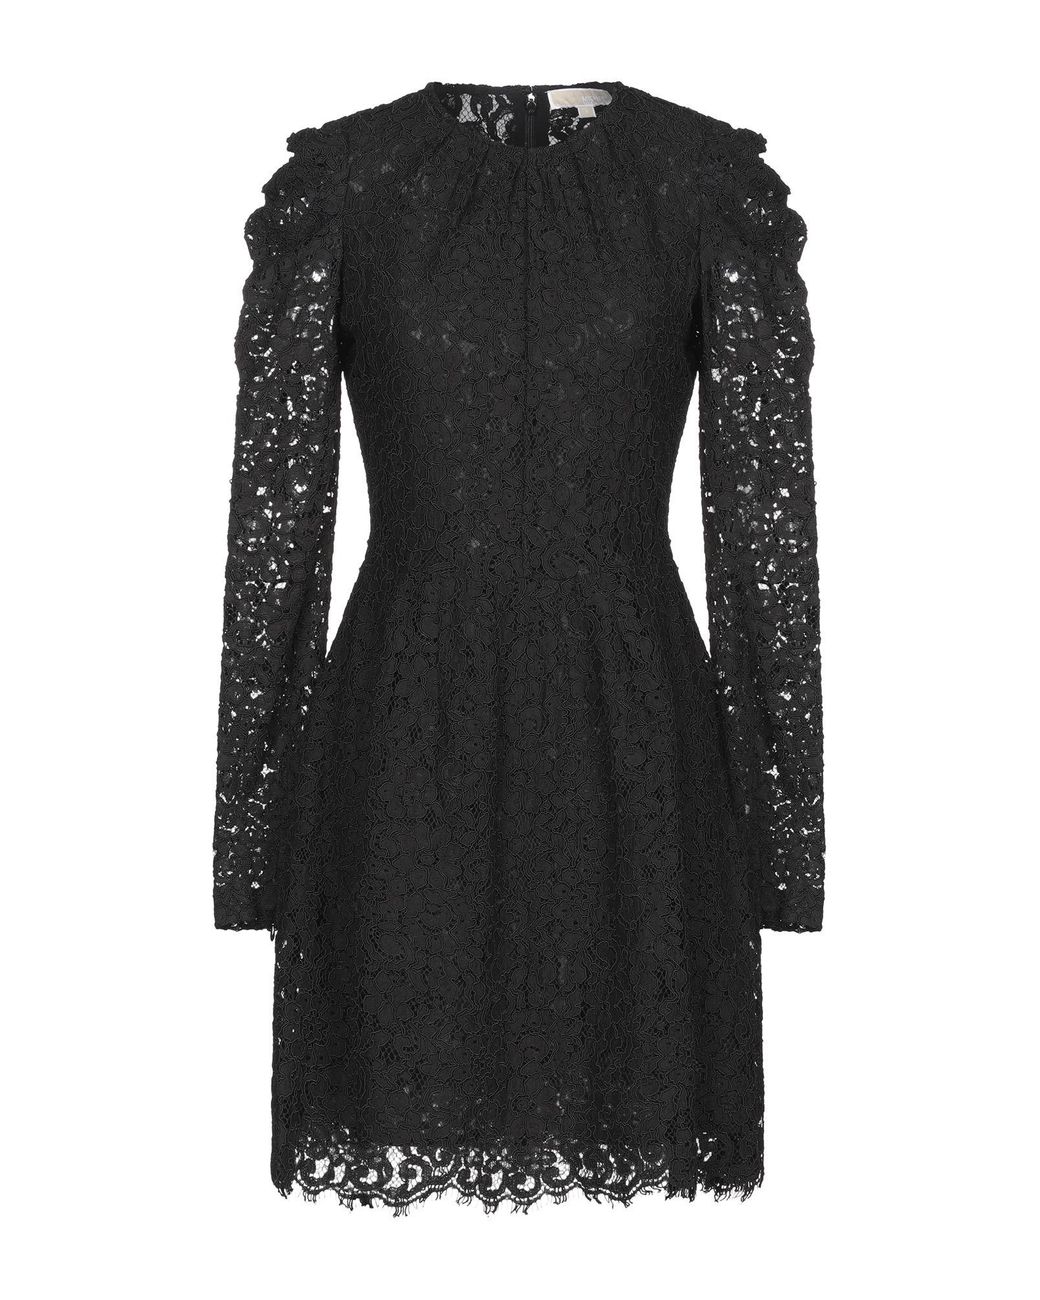 MICHAEL Michael Kors Lace Short Dress in Black - Lyst